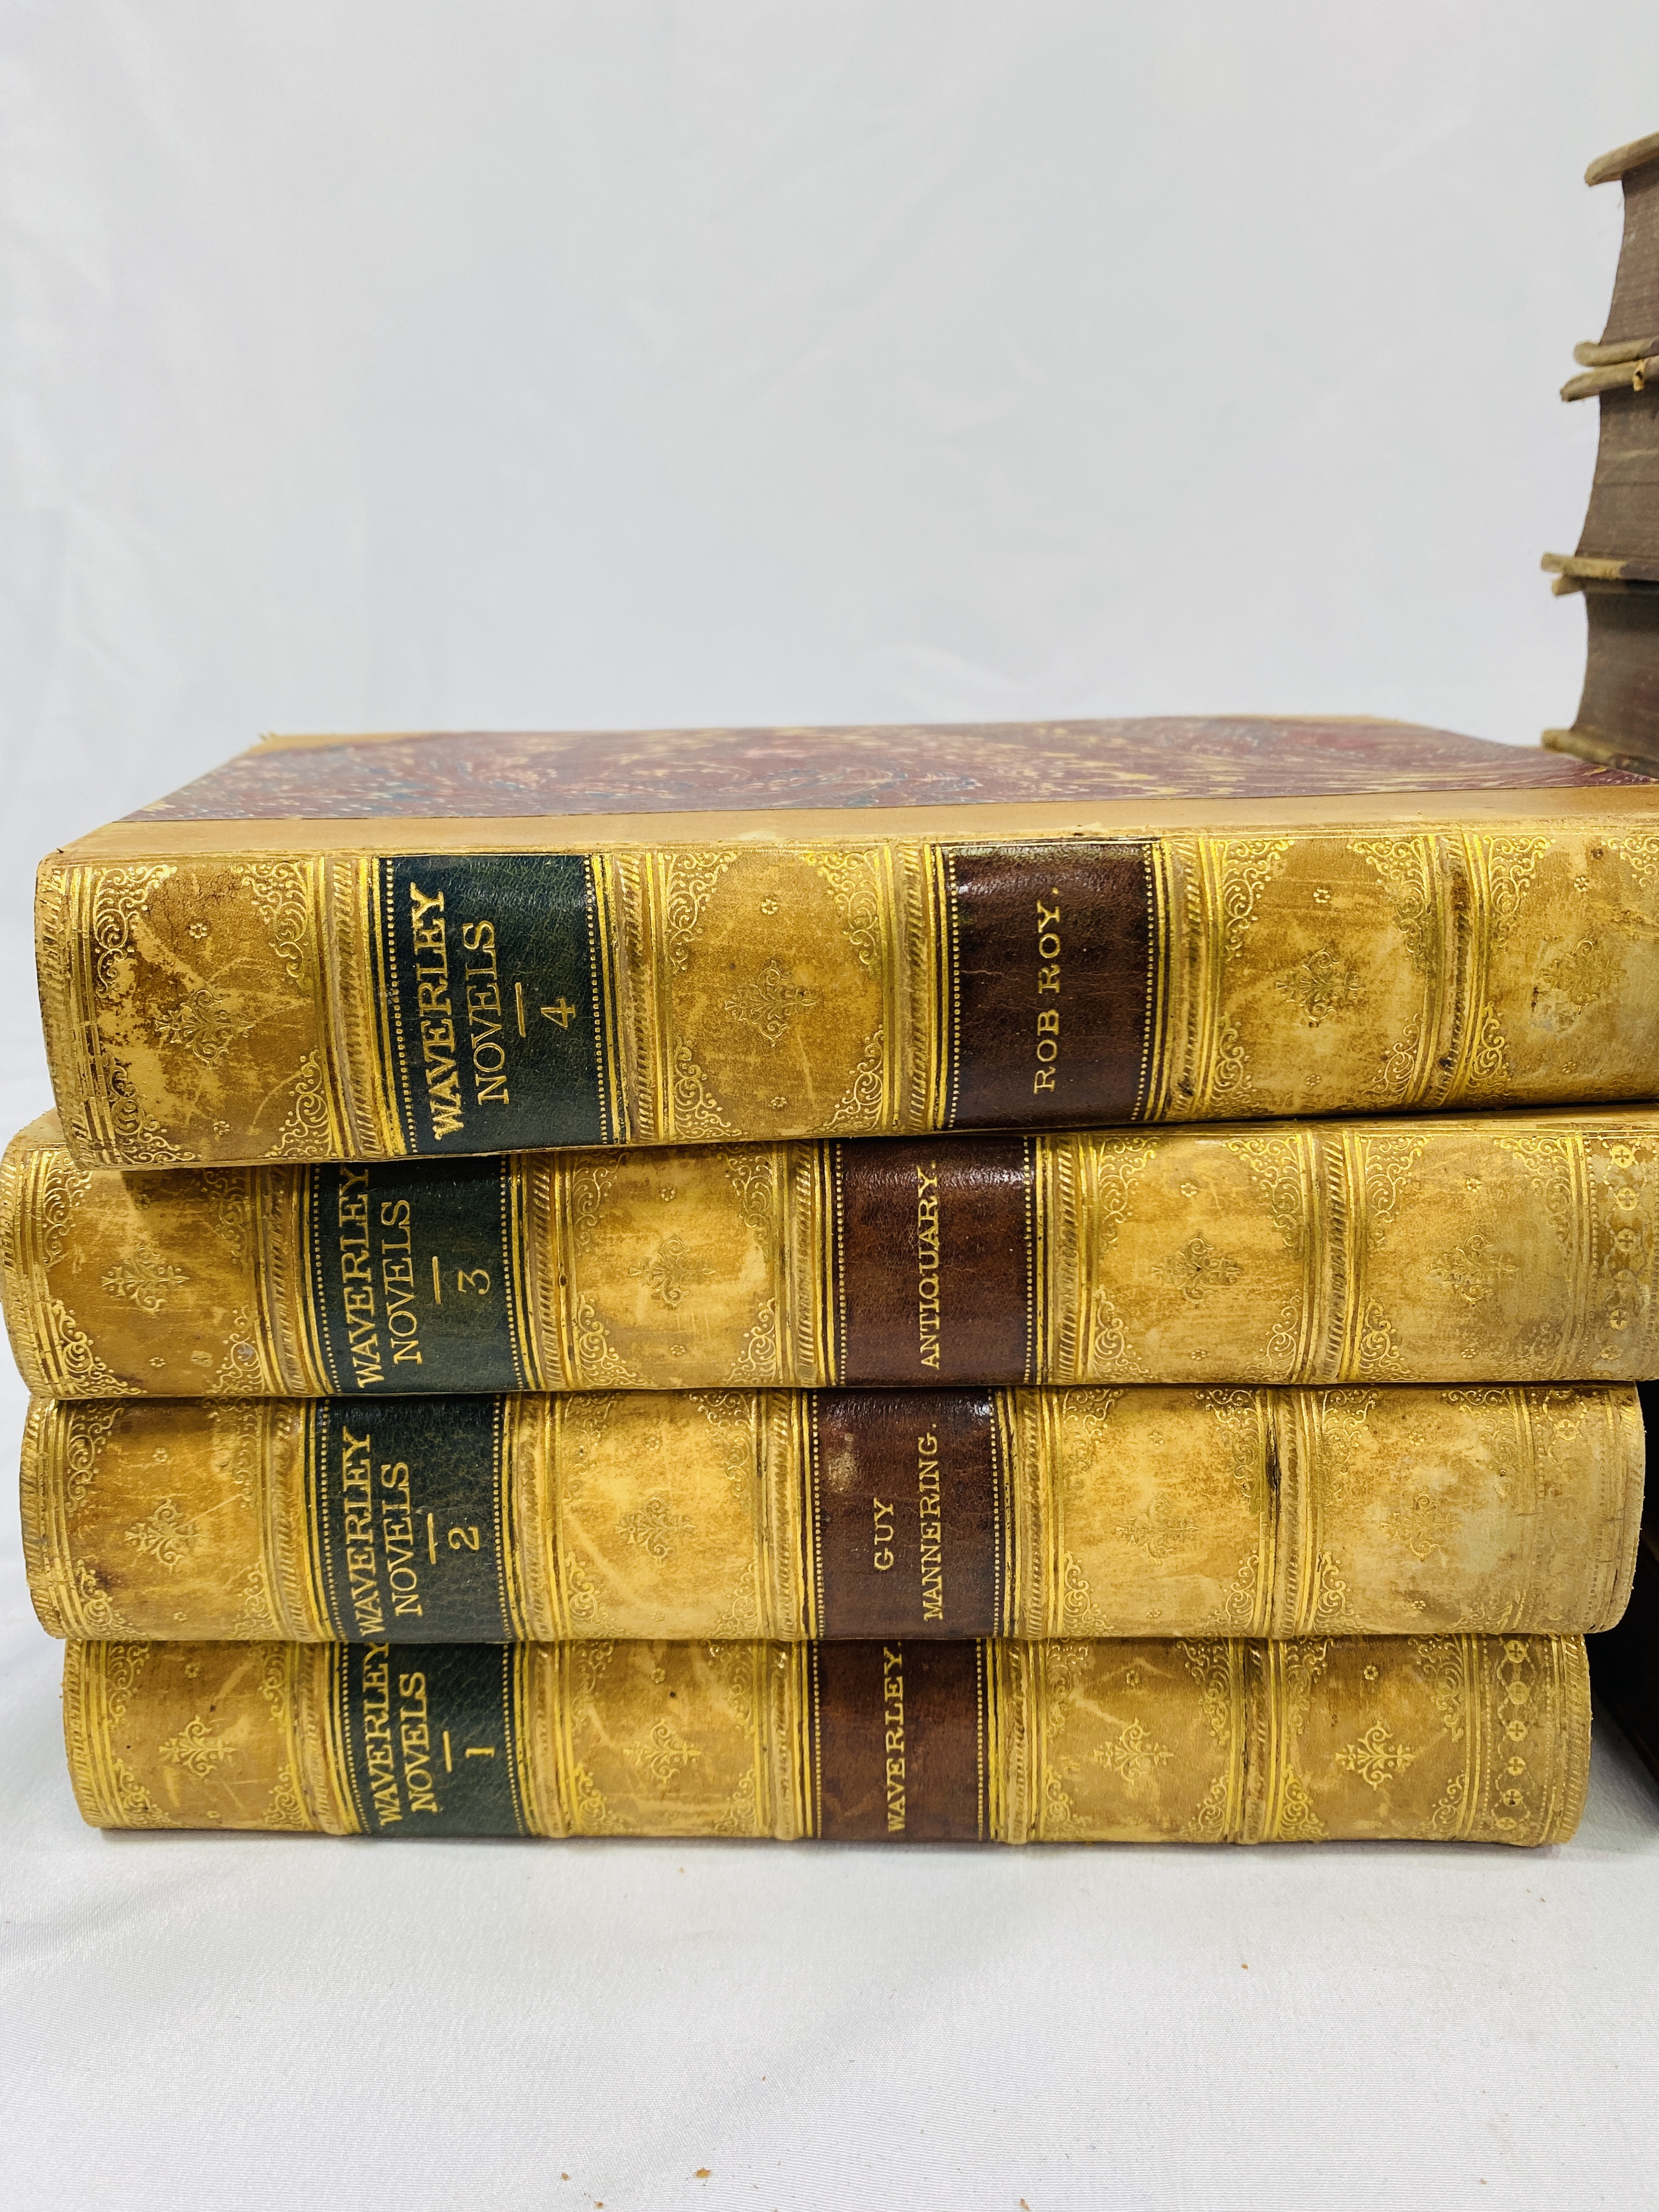 Waverley Novels, 1871 - Image 2 of 11